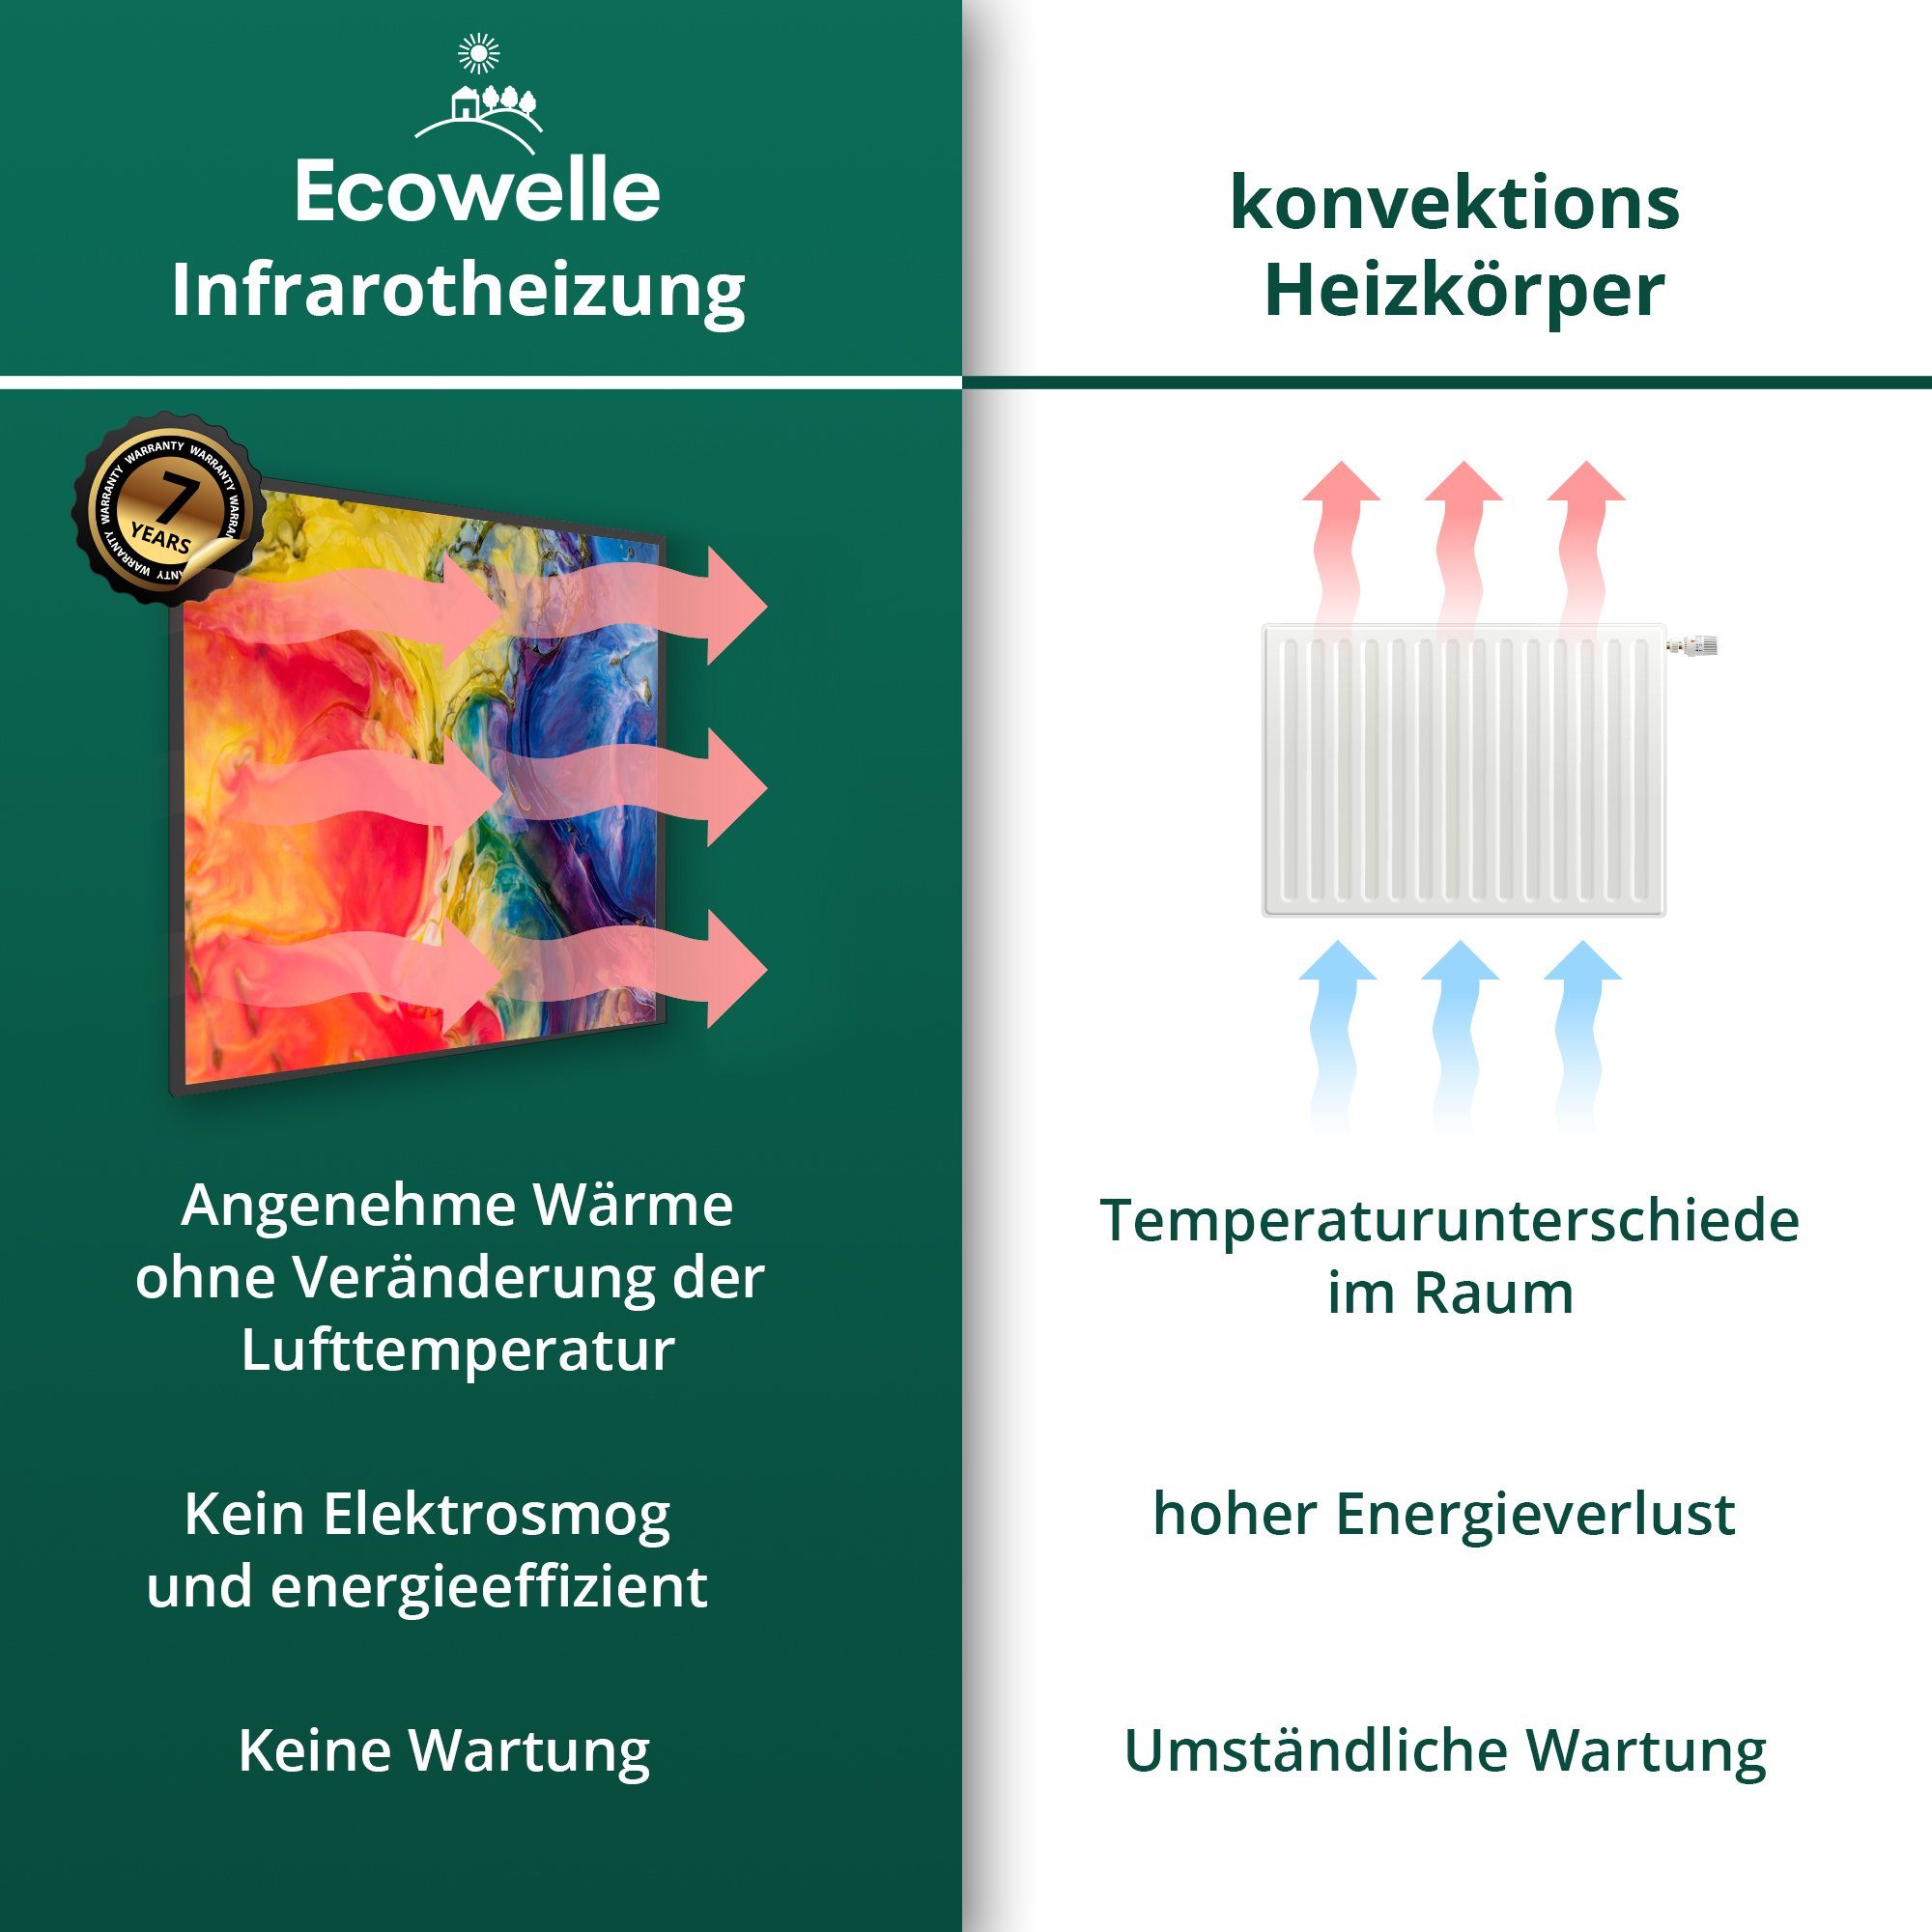 Ecowelle Infrarotheizung WEISS Wifi in Elektroheizung Germany 350-1200 + Made Watt App Thermostat